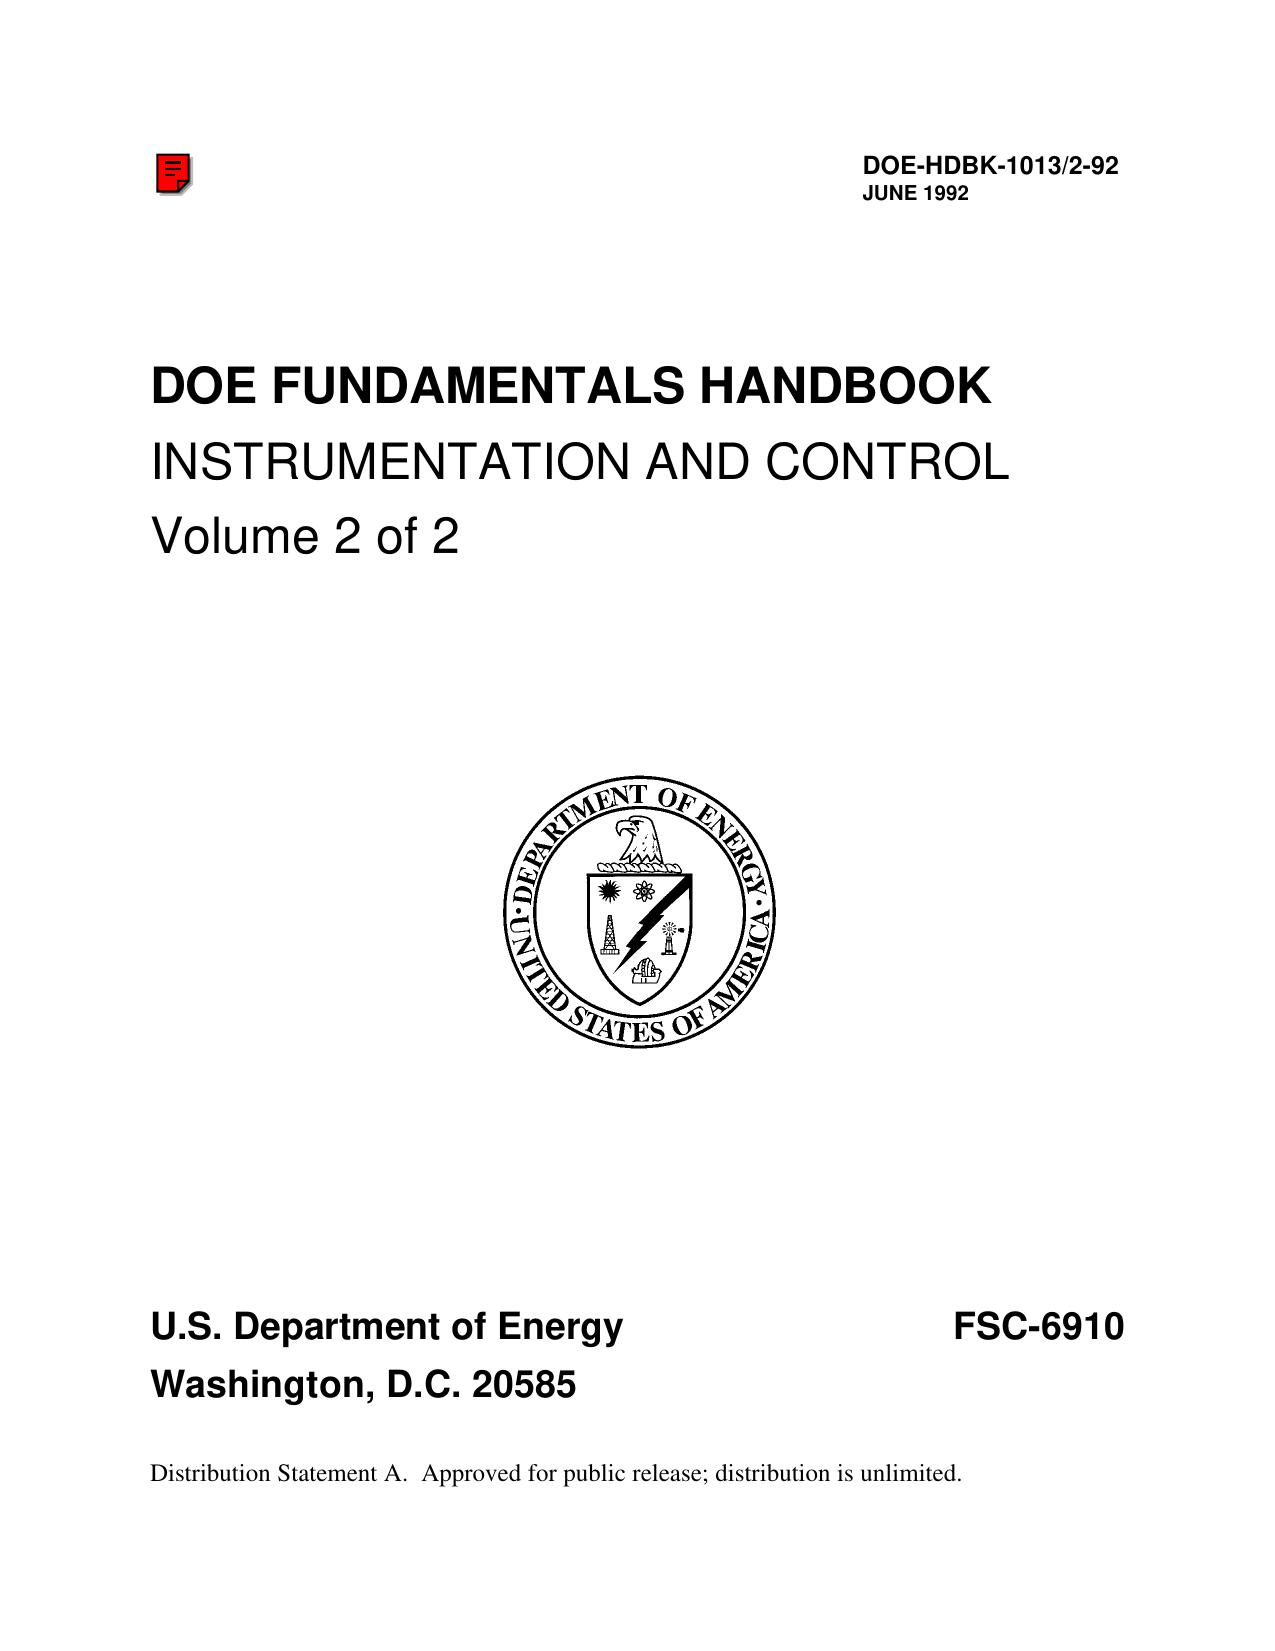 DOE-HDBK-1013/2-92; DOE Fundamentals Handbook Instrumentation and Control Volume 2 of 2